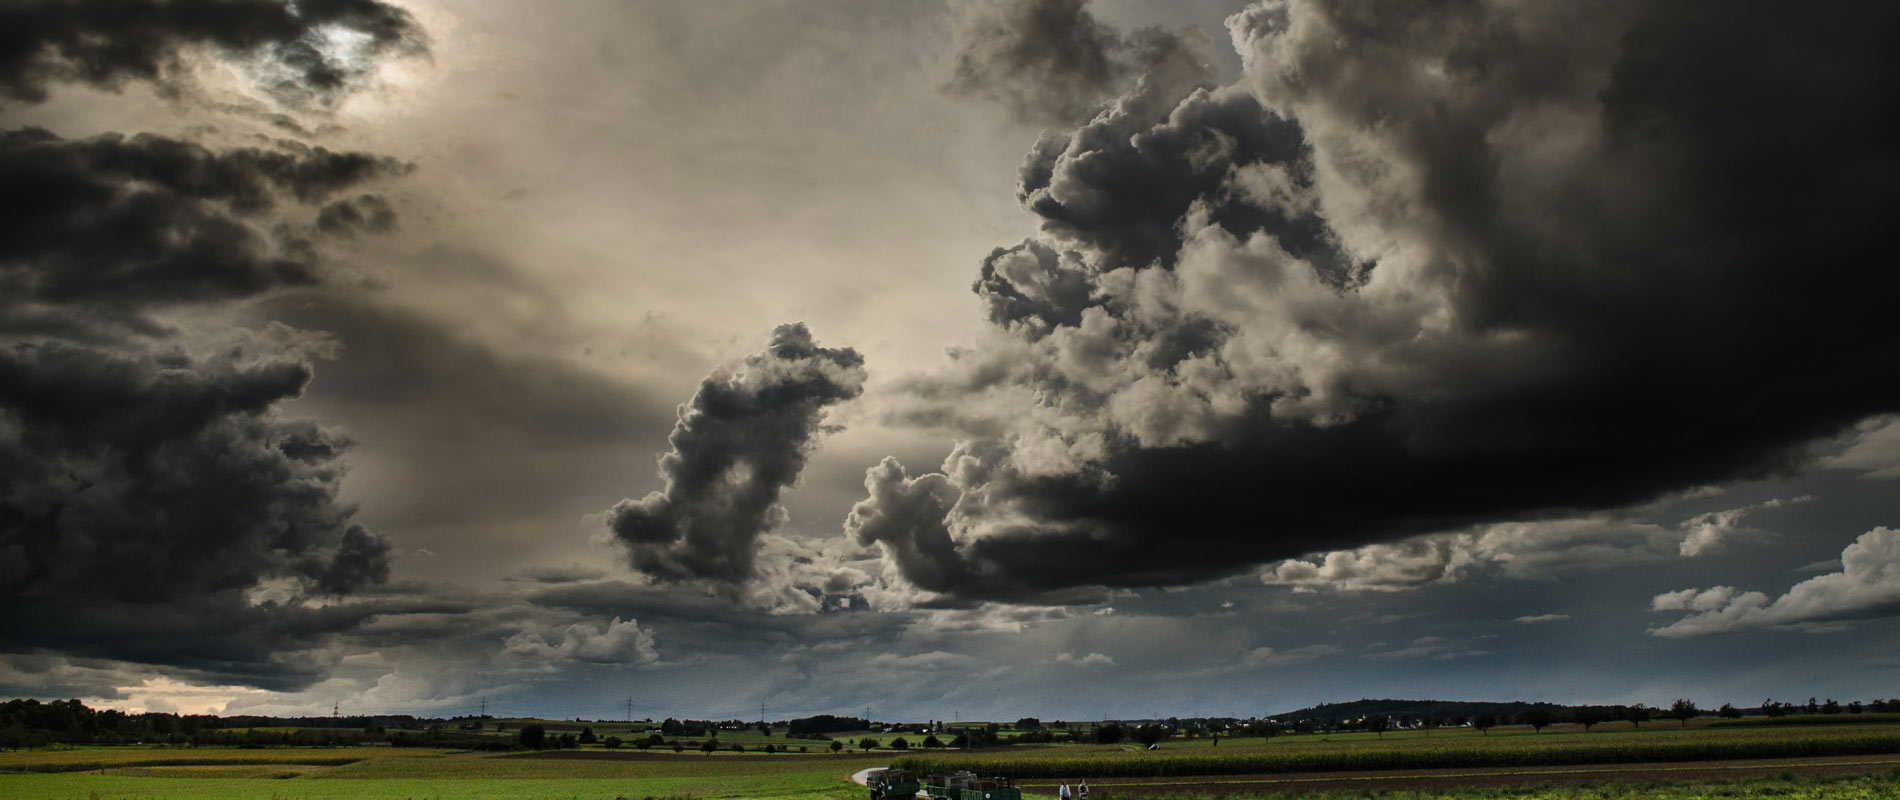 Photo by Moritz Böing: https://www.pexels.com/photo/cloudy-sky-846980/